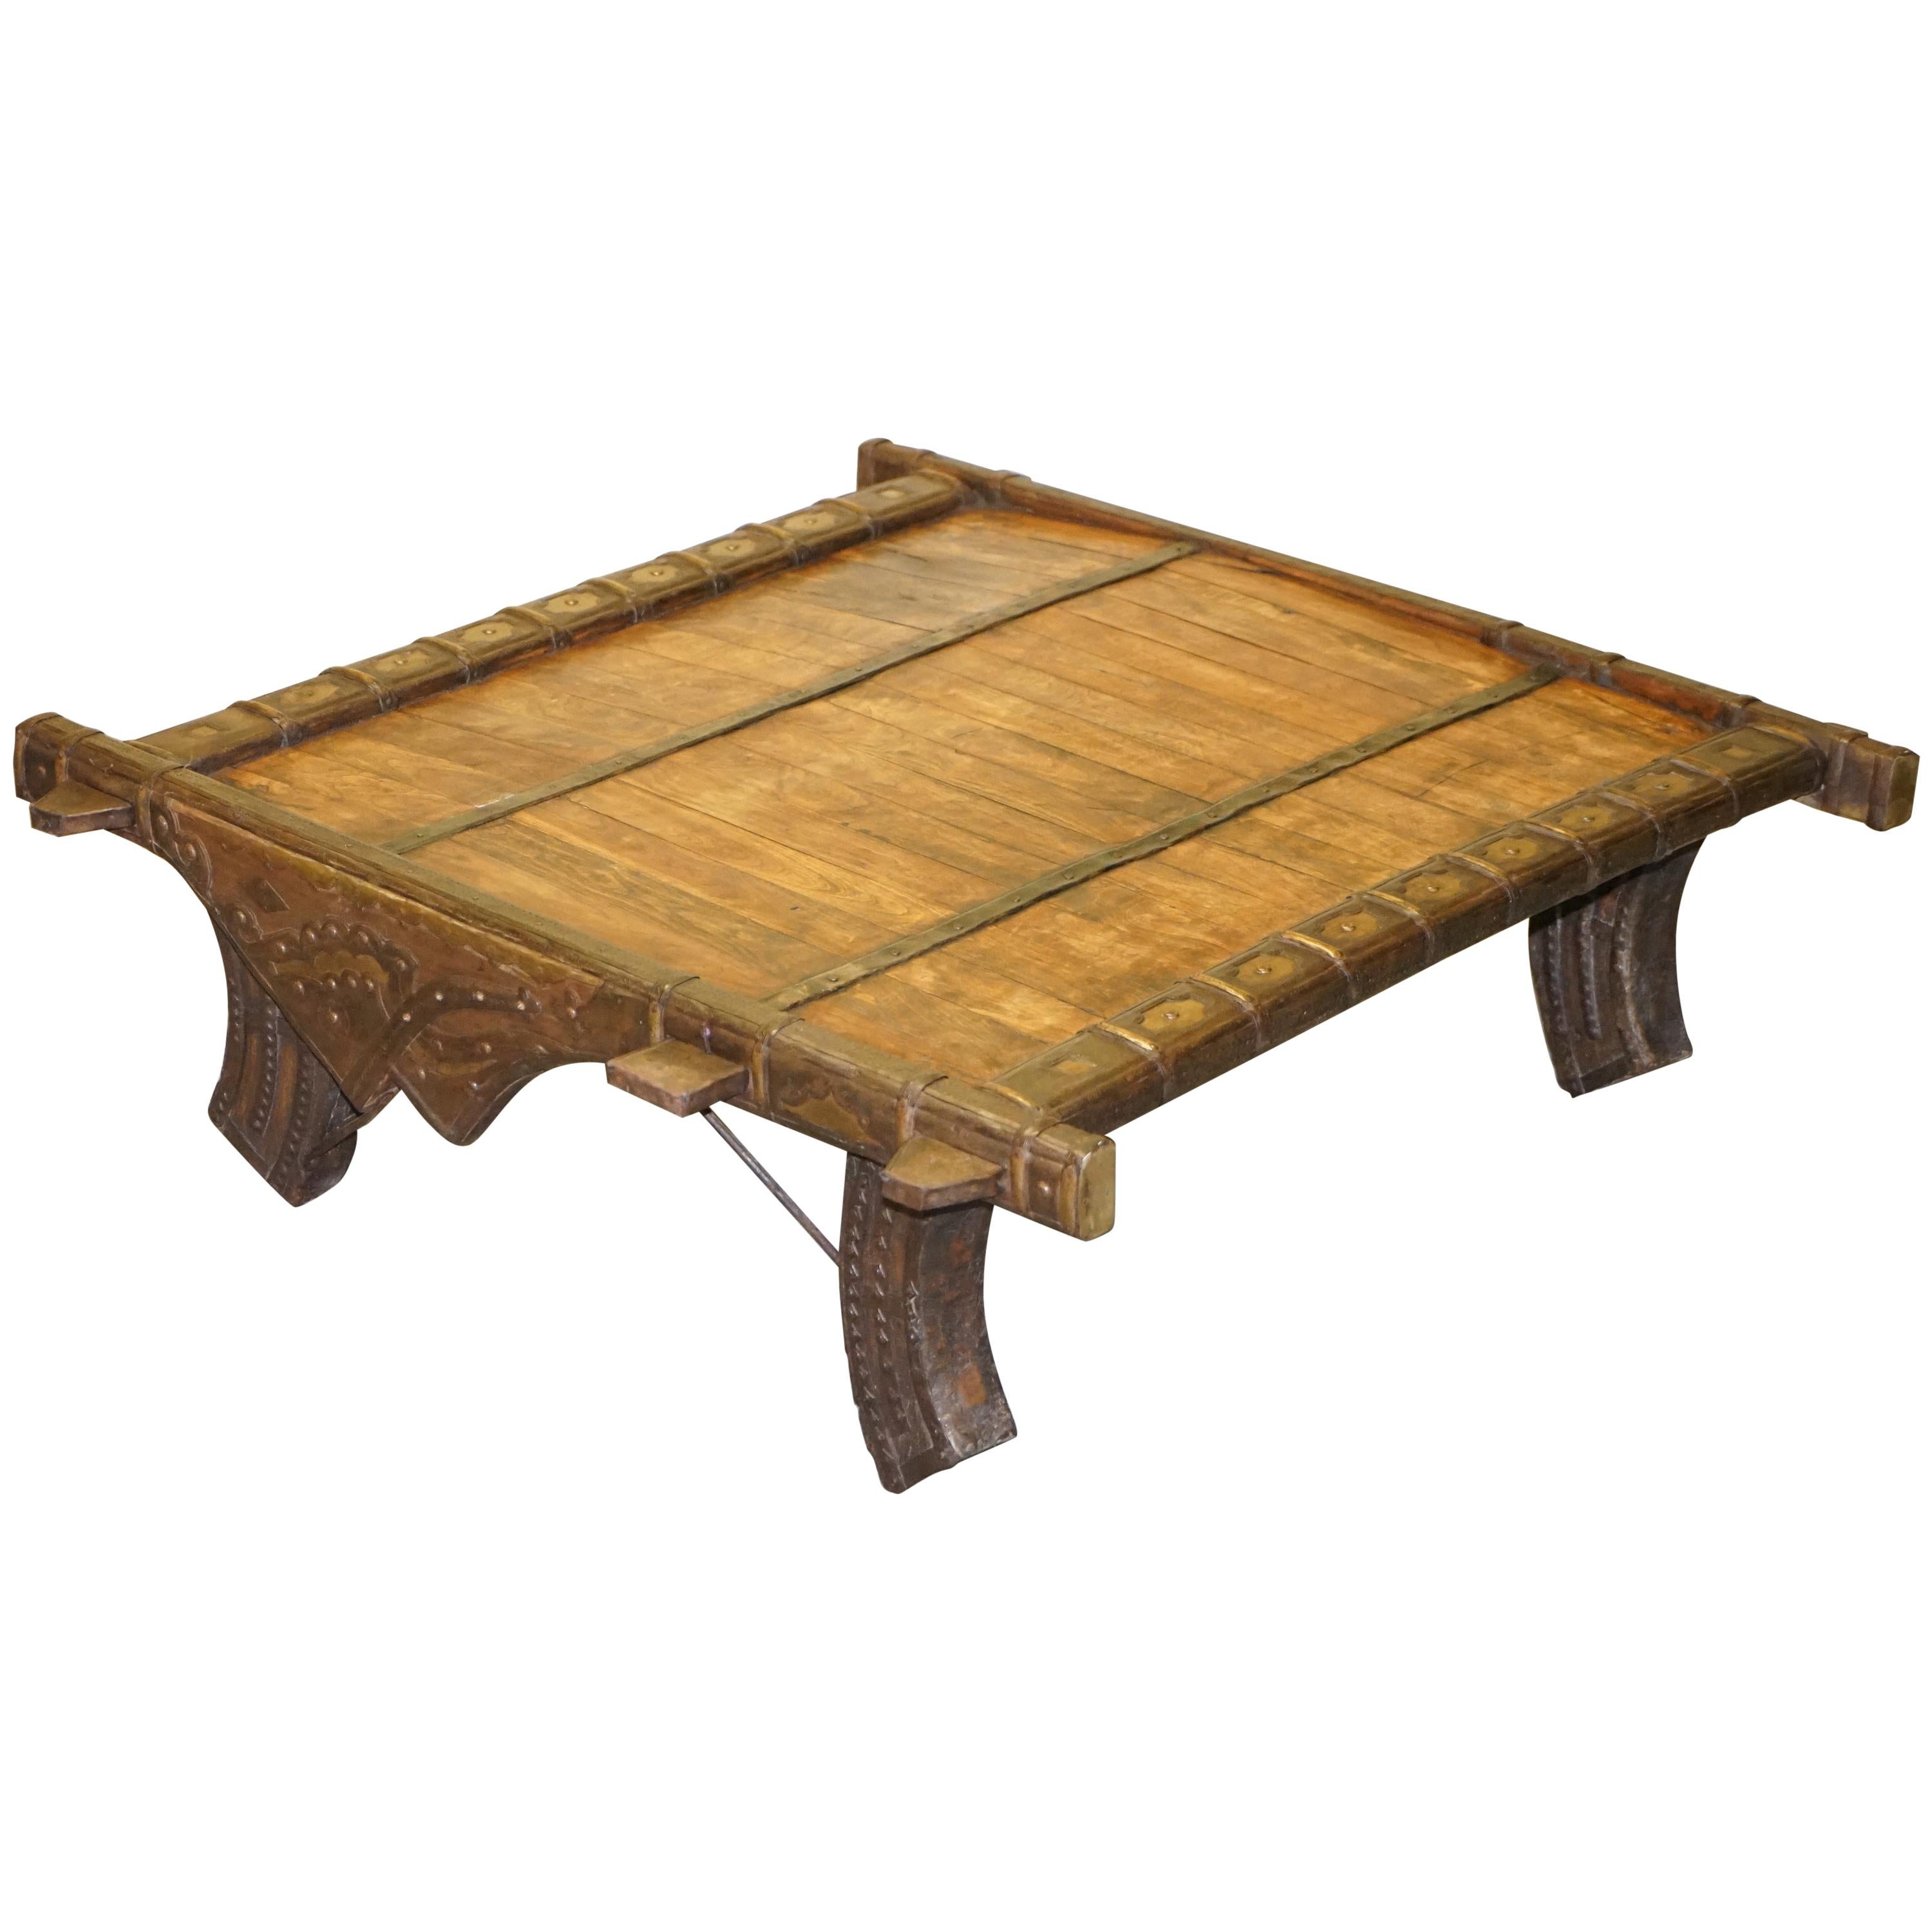 Stunning Original Antique Tibetan Reclaimed Wood and Metal Bound Coffee Table